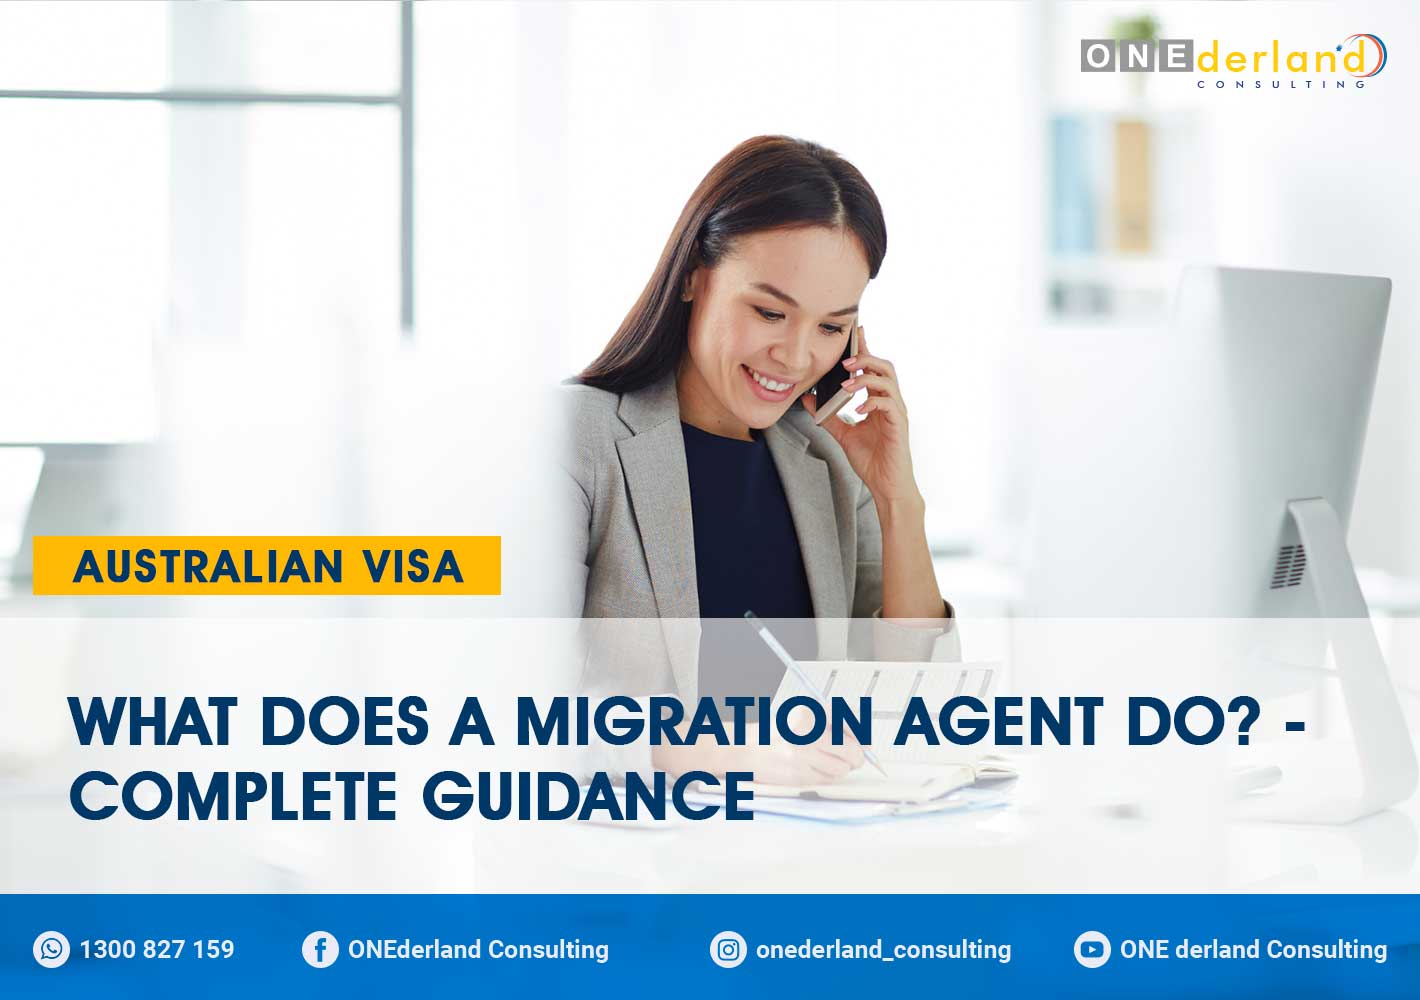 Migration Agent – What does a migration agent do?